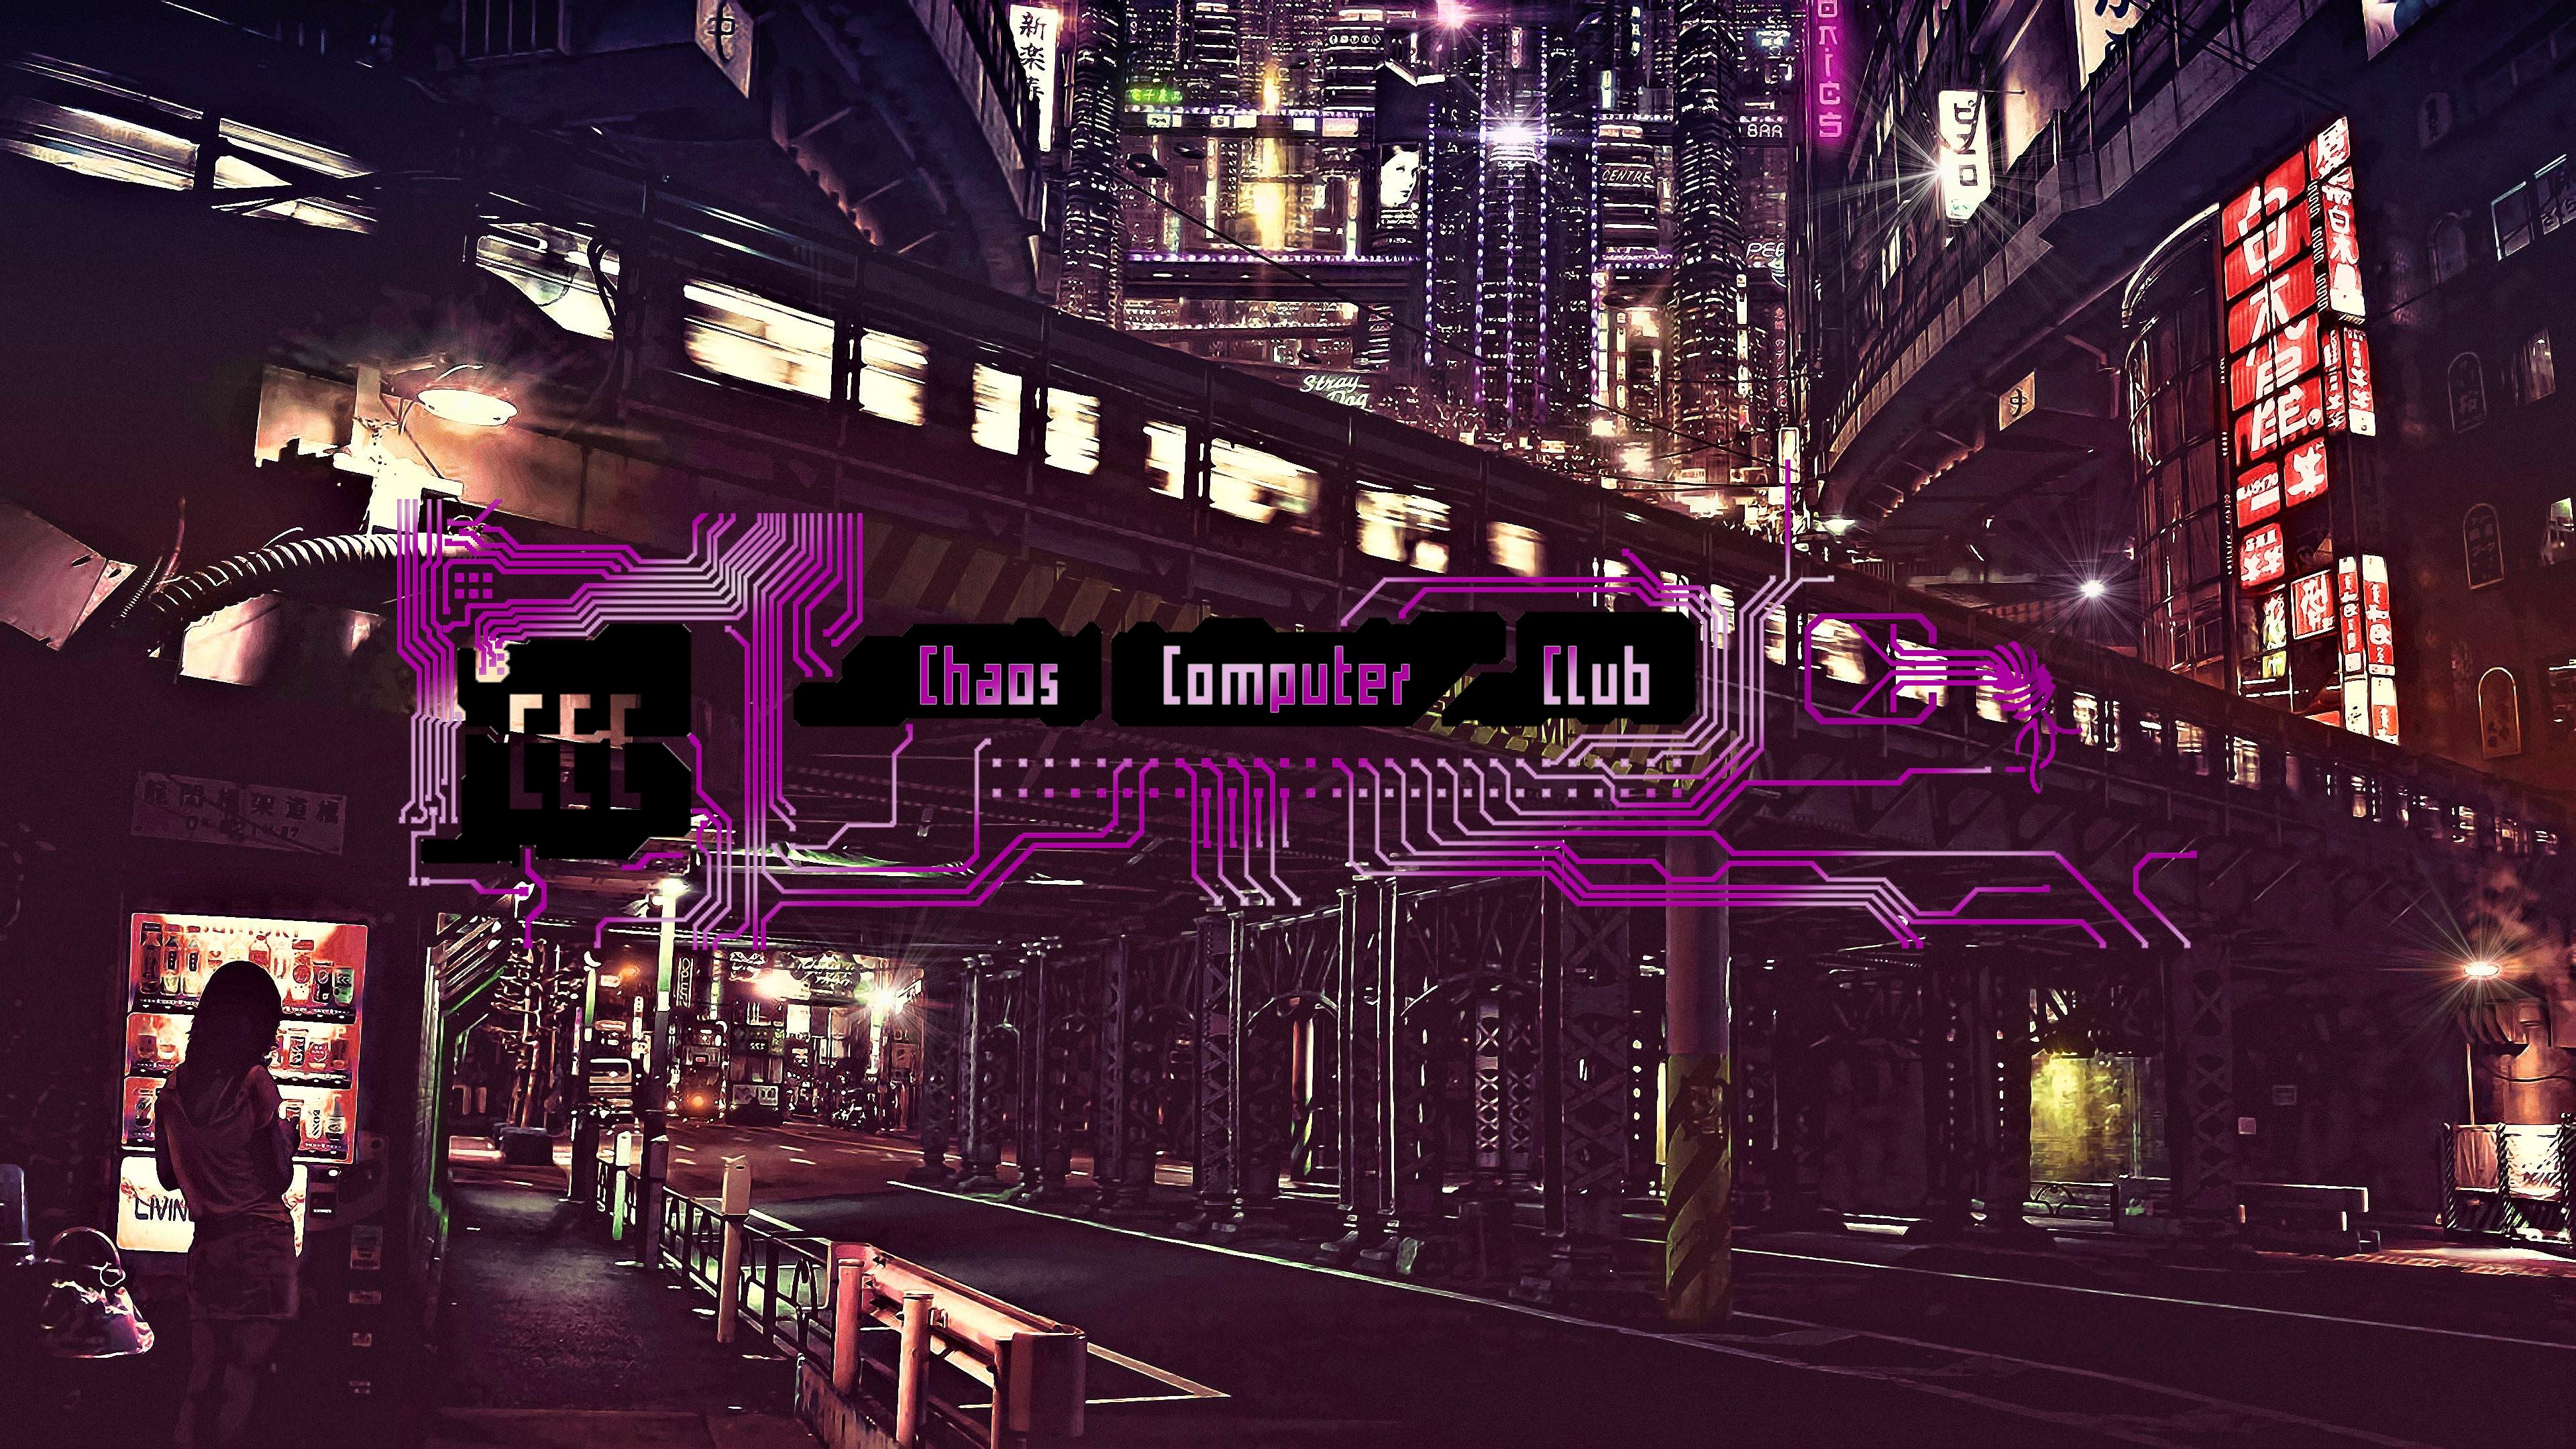 Unknown Sci-fi city tokio background with Chaos Computer Club logo